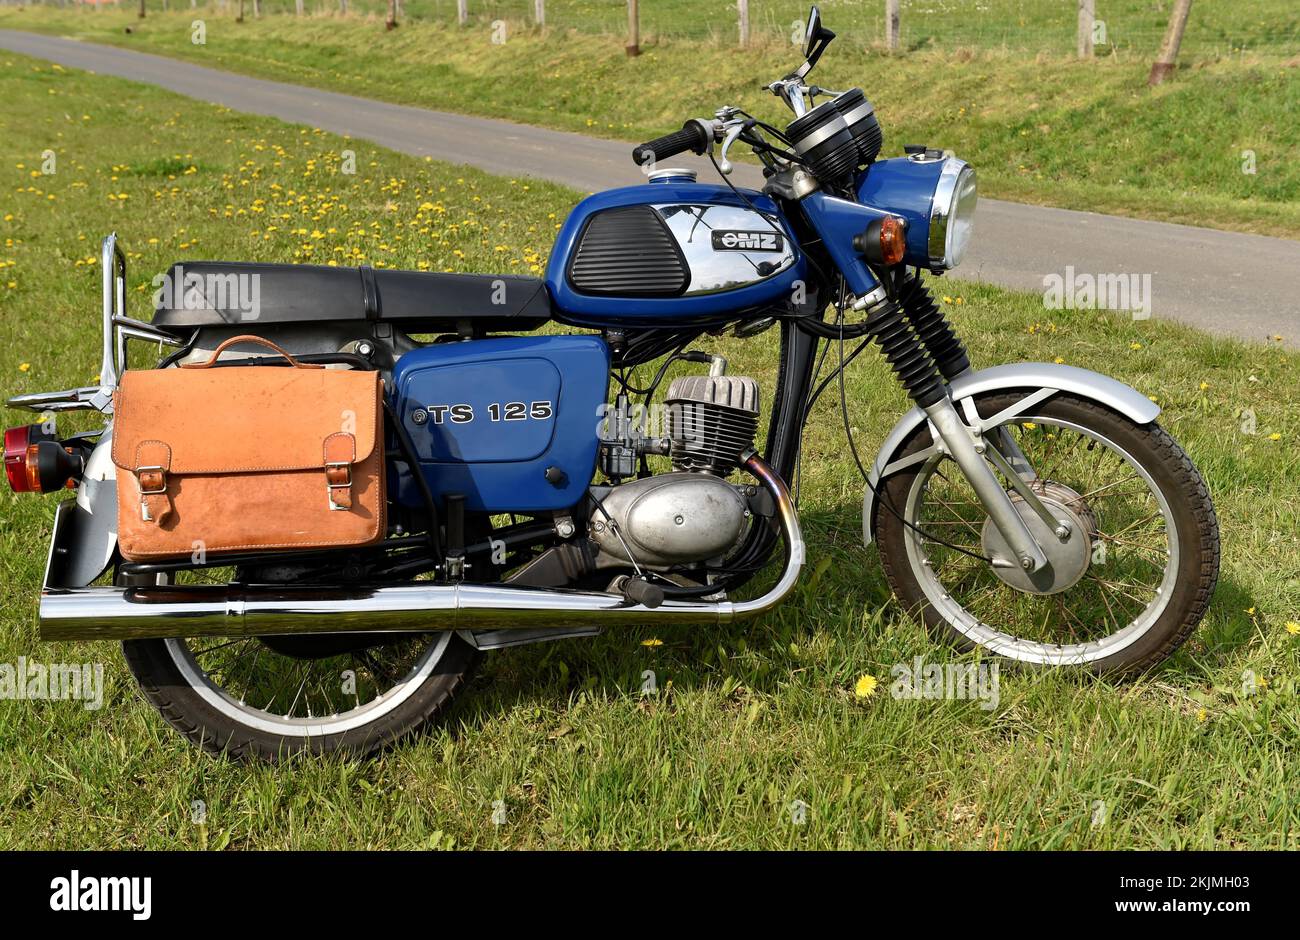 Oldtimer-Motorrad der DDR MZ TS 125, Hessen, Deutschland, Europa  Stockfotografie - Alamy